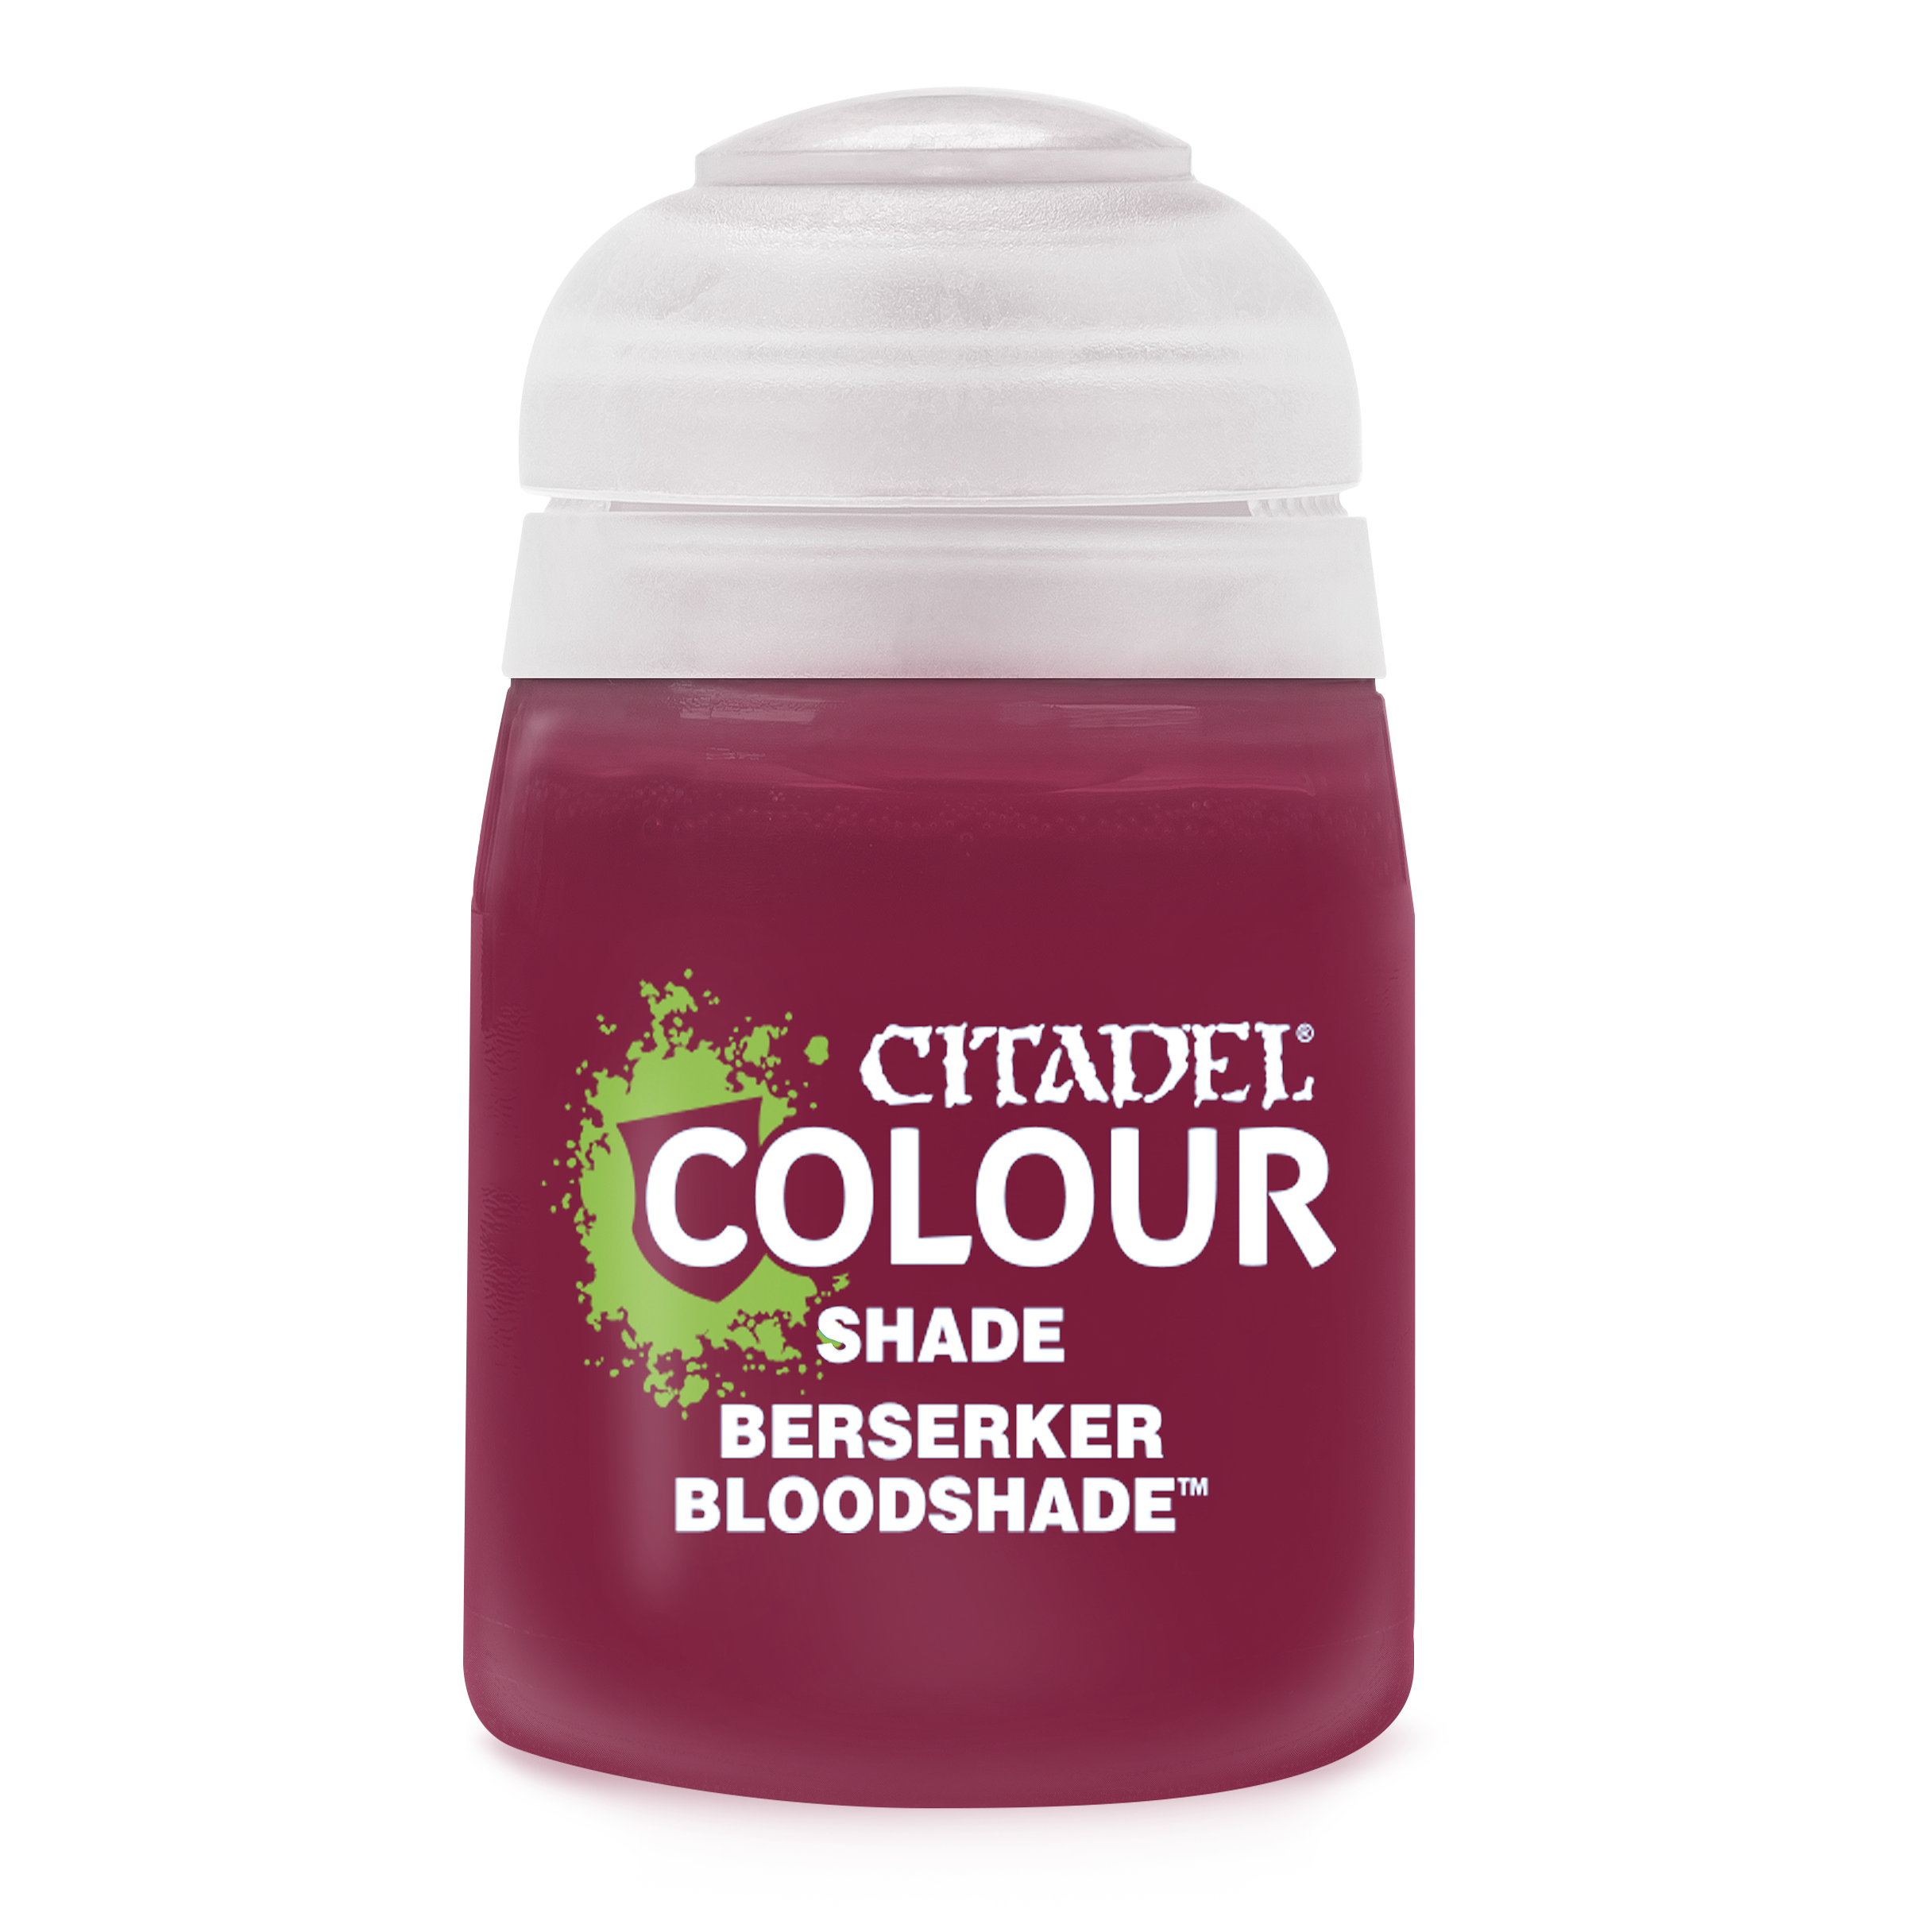 Berserker Bloodshade - Citadel Shade Colour